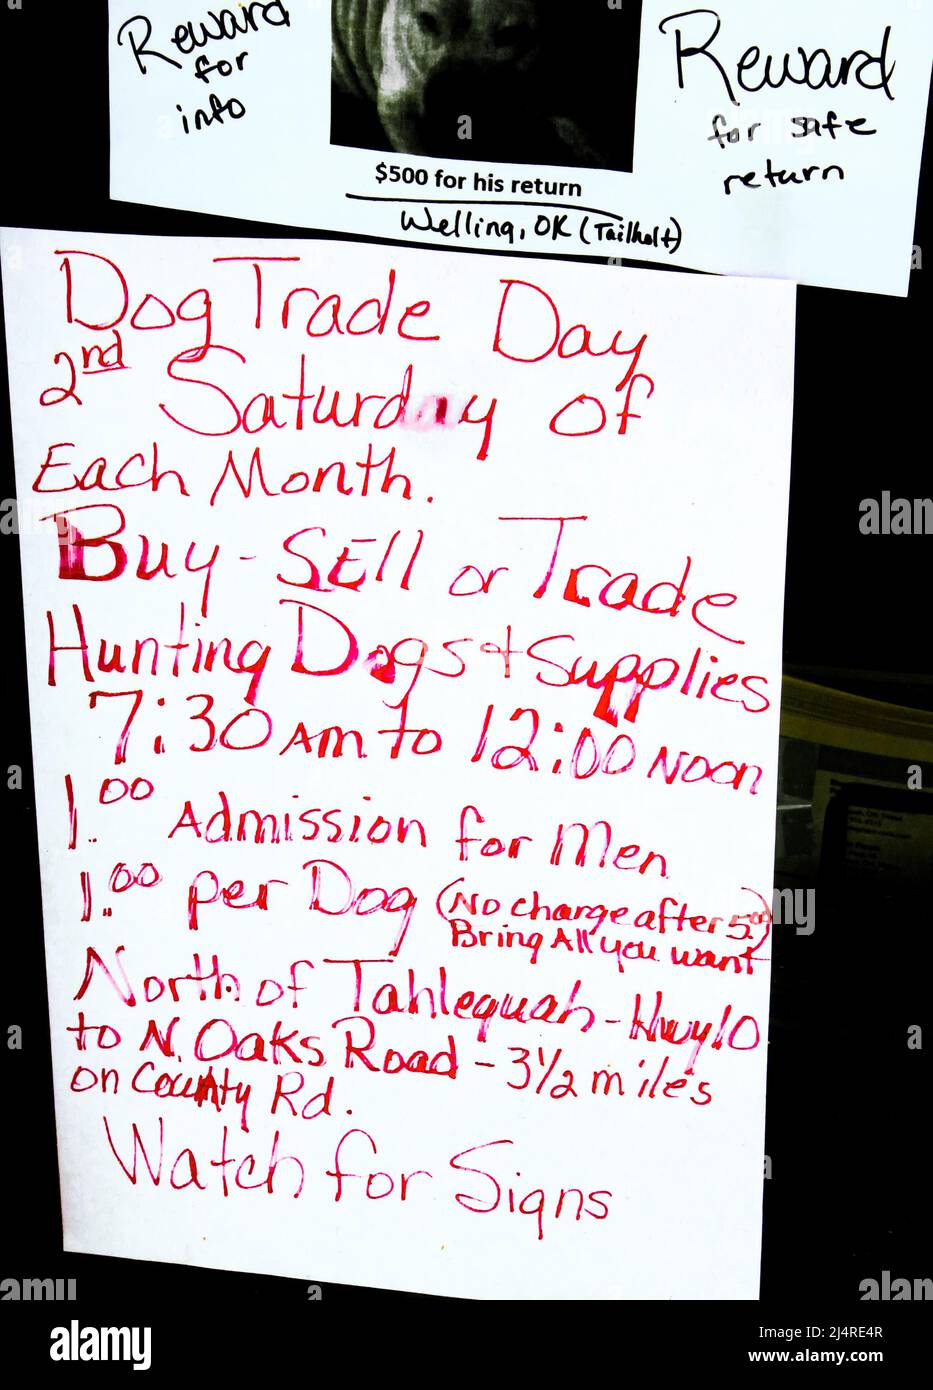 circa May 2012 Cherokee County Oklahoma USA - Sign for Dog Trade Day for hunters Stock Photo